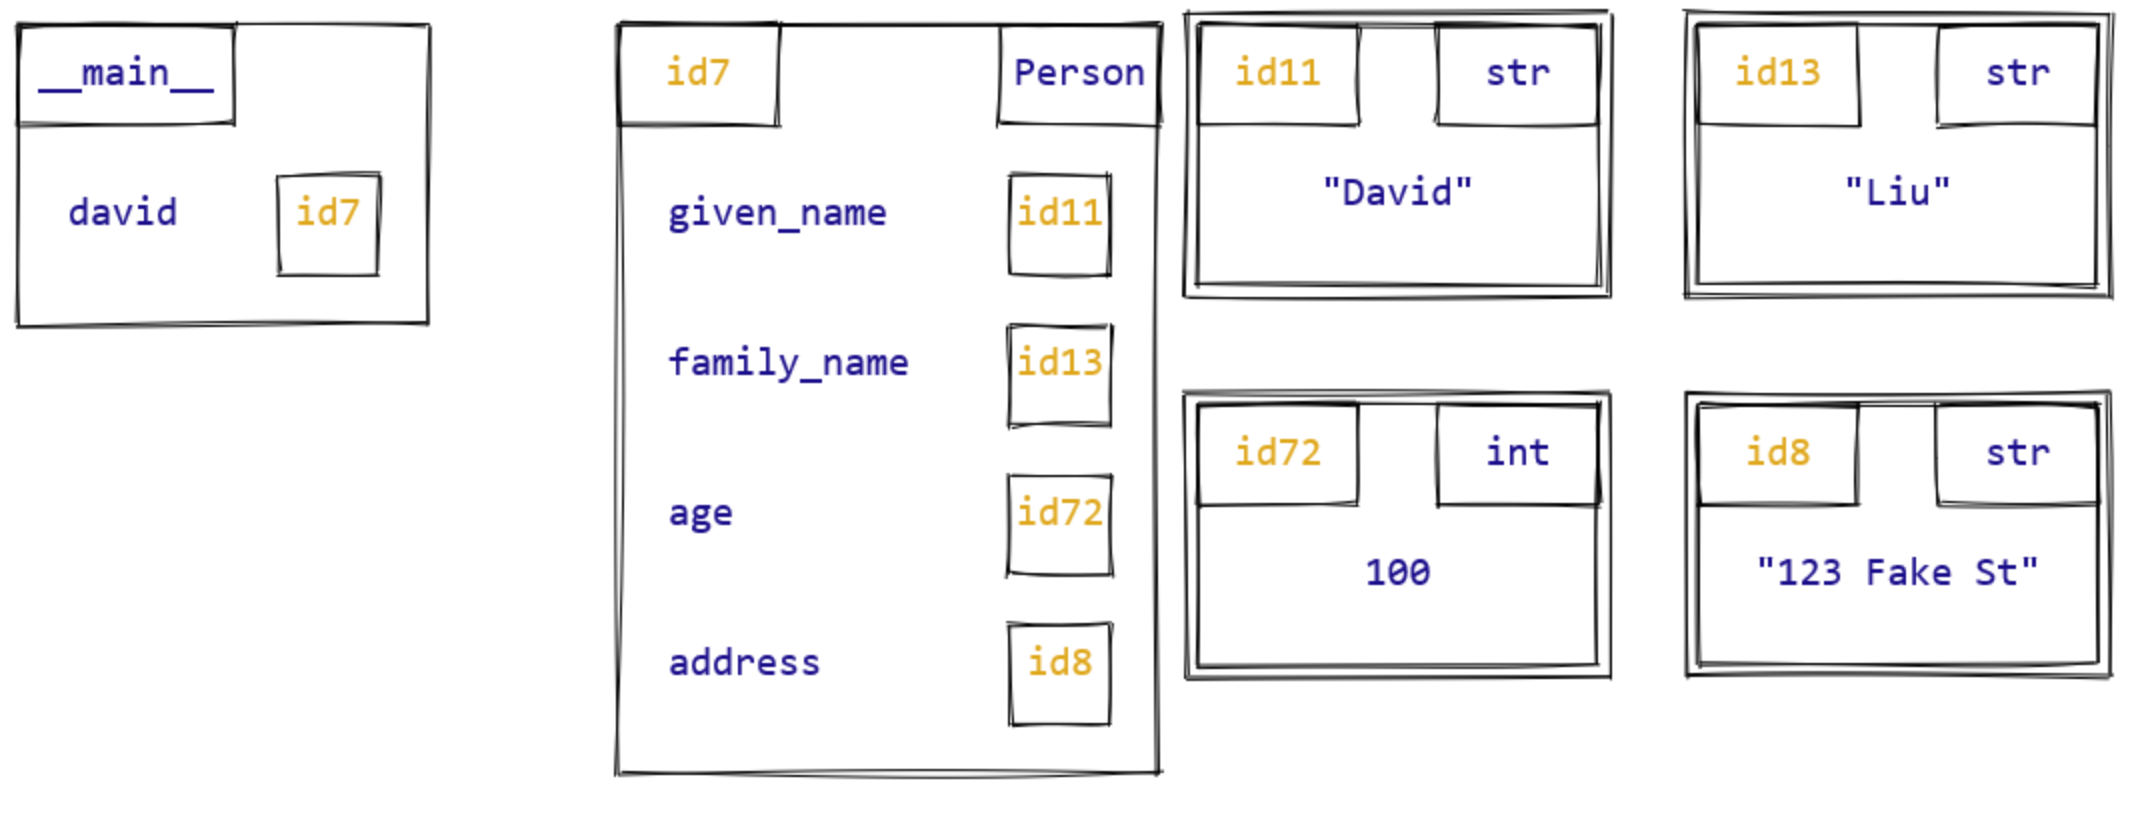 Person data class memory model diagram